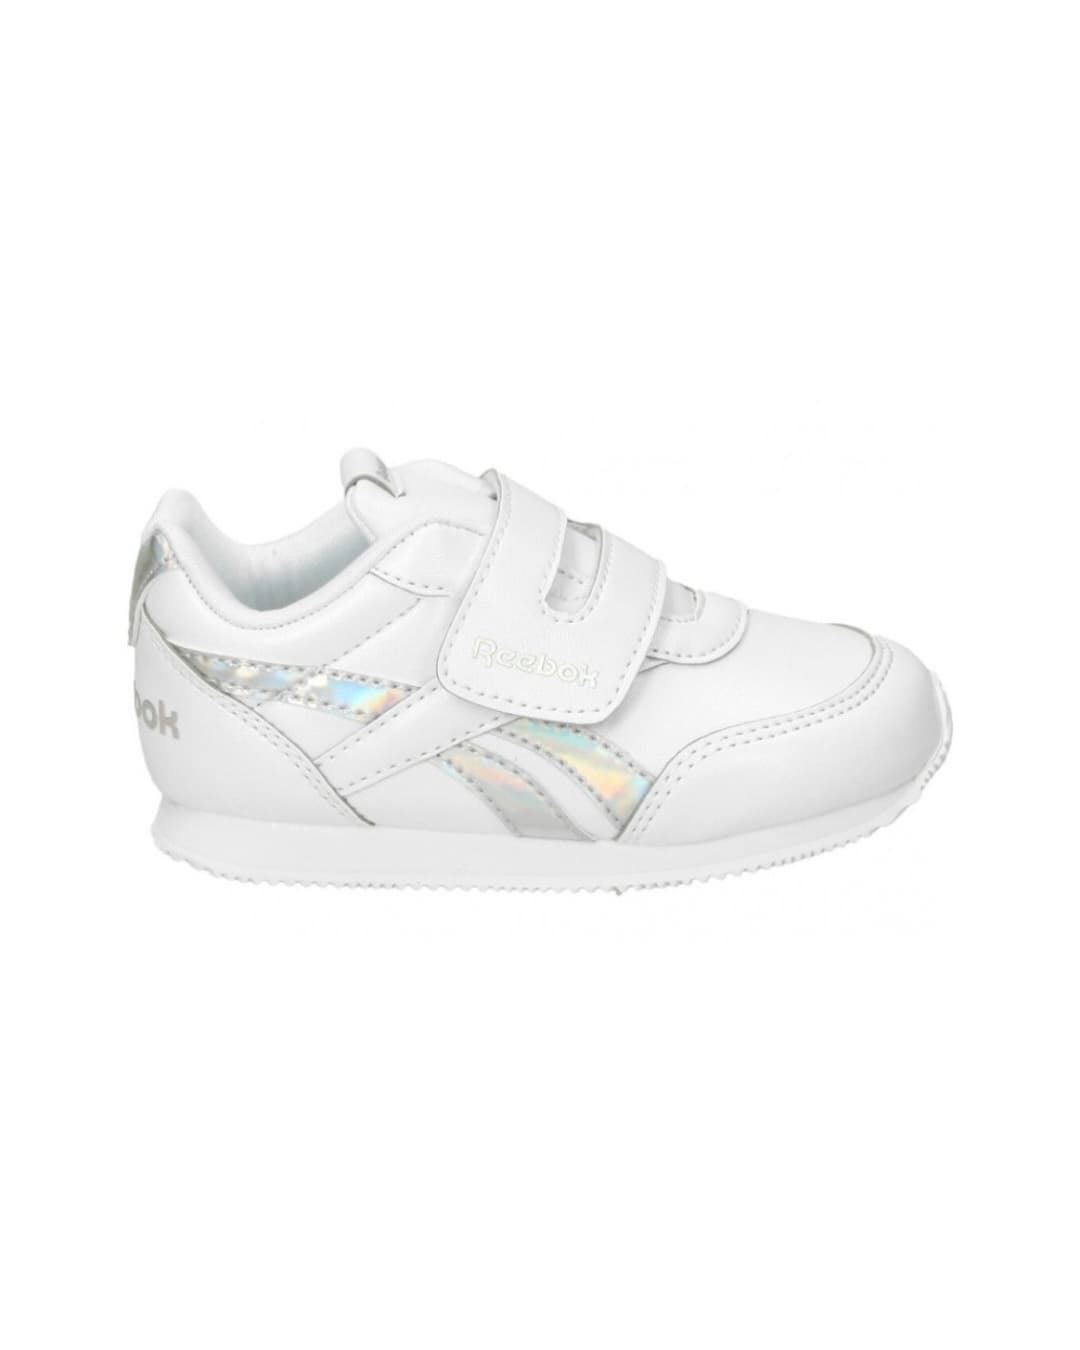 Reebok Royal Cljog Girl's Sneakers White Silver - Image 1